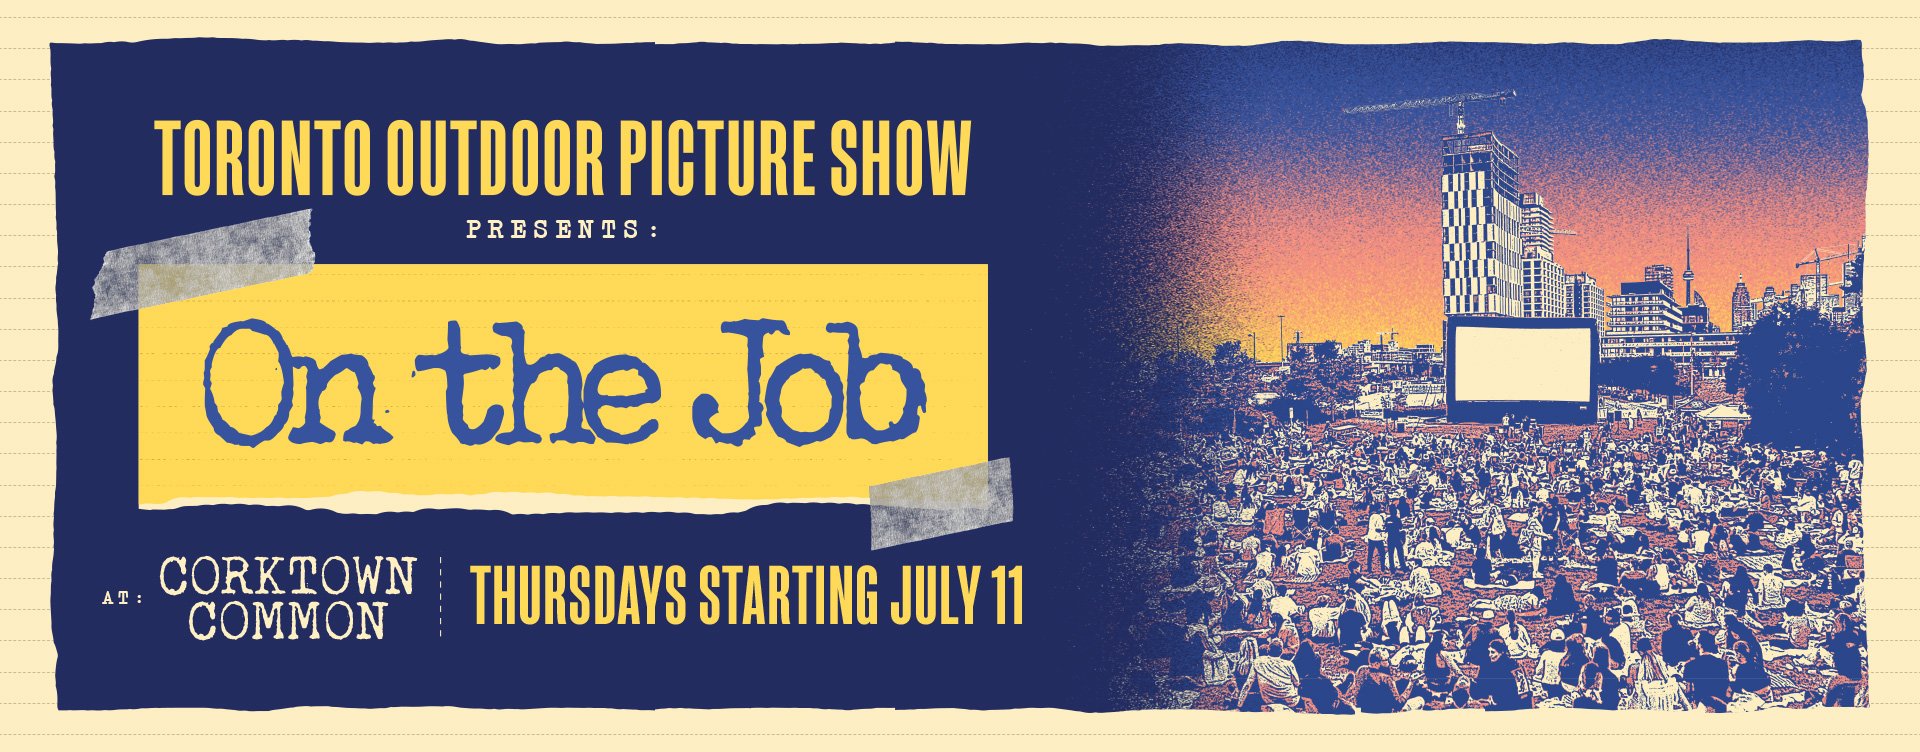 TOPS presents "On the Job" at Corktown Common - Thursdays July 11-Aug 1